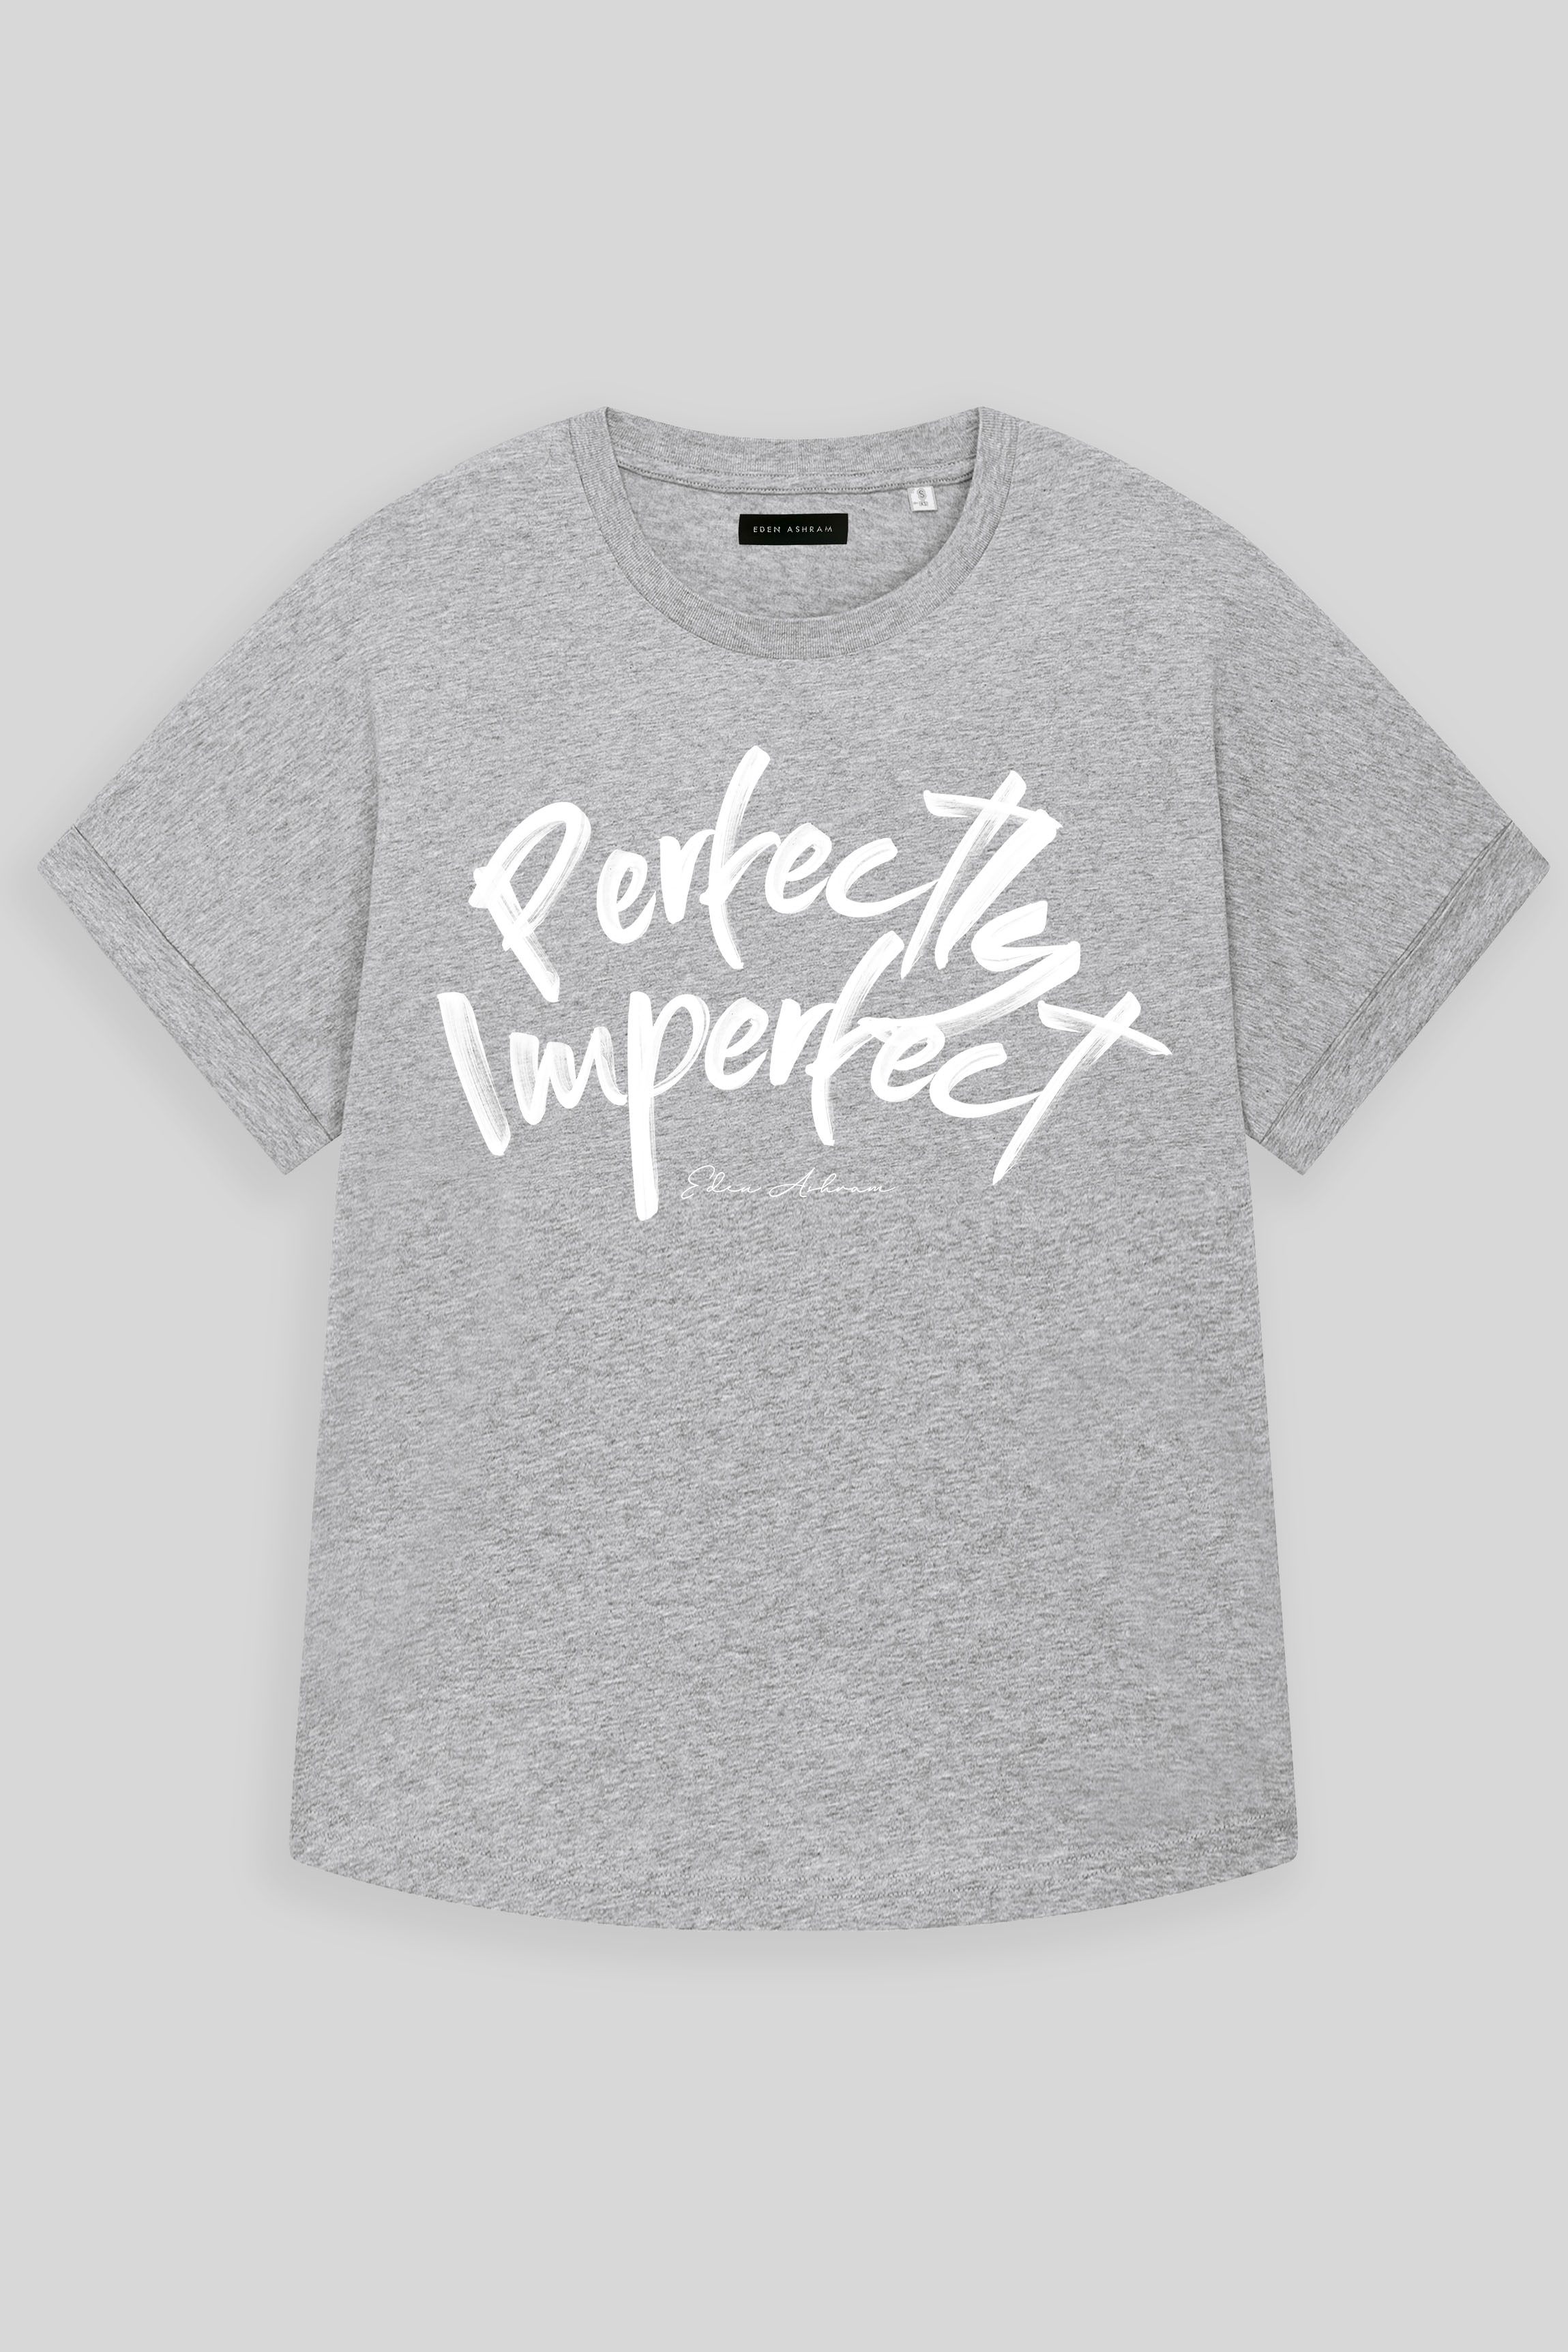 EDEN ASHRAM Perfectly Imperfect Premium Oversized Rolled Sleeve T-Shirt Heather Grey